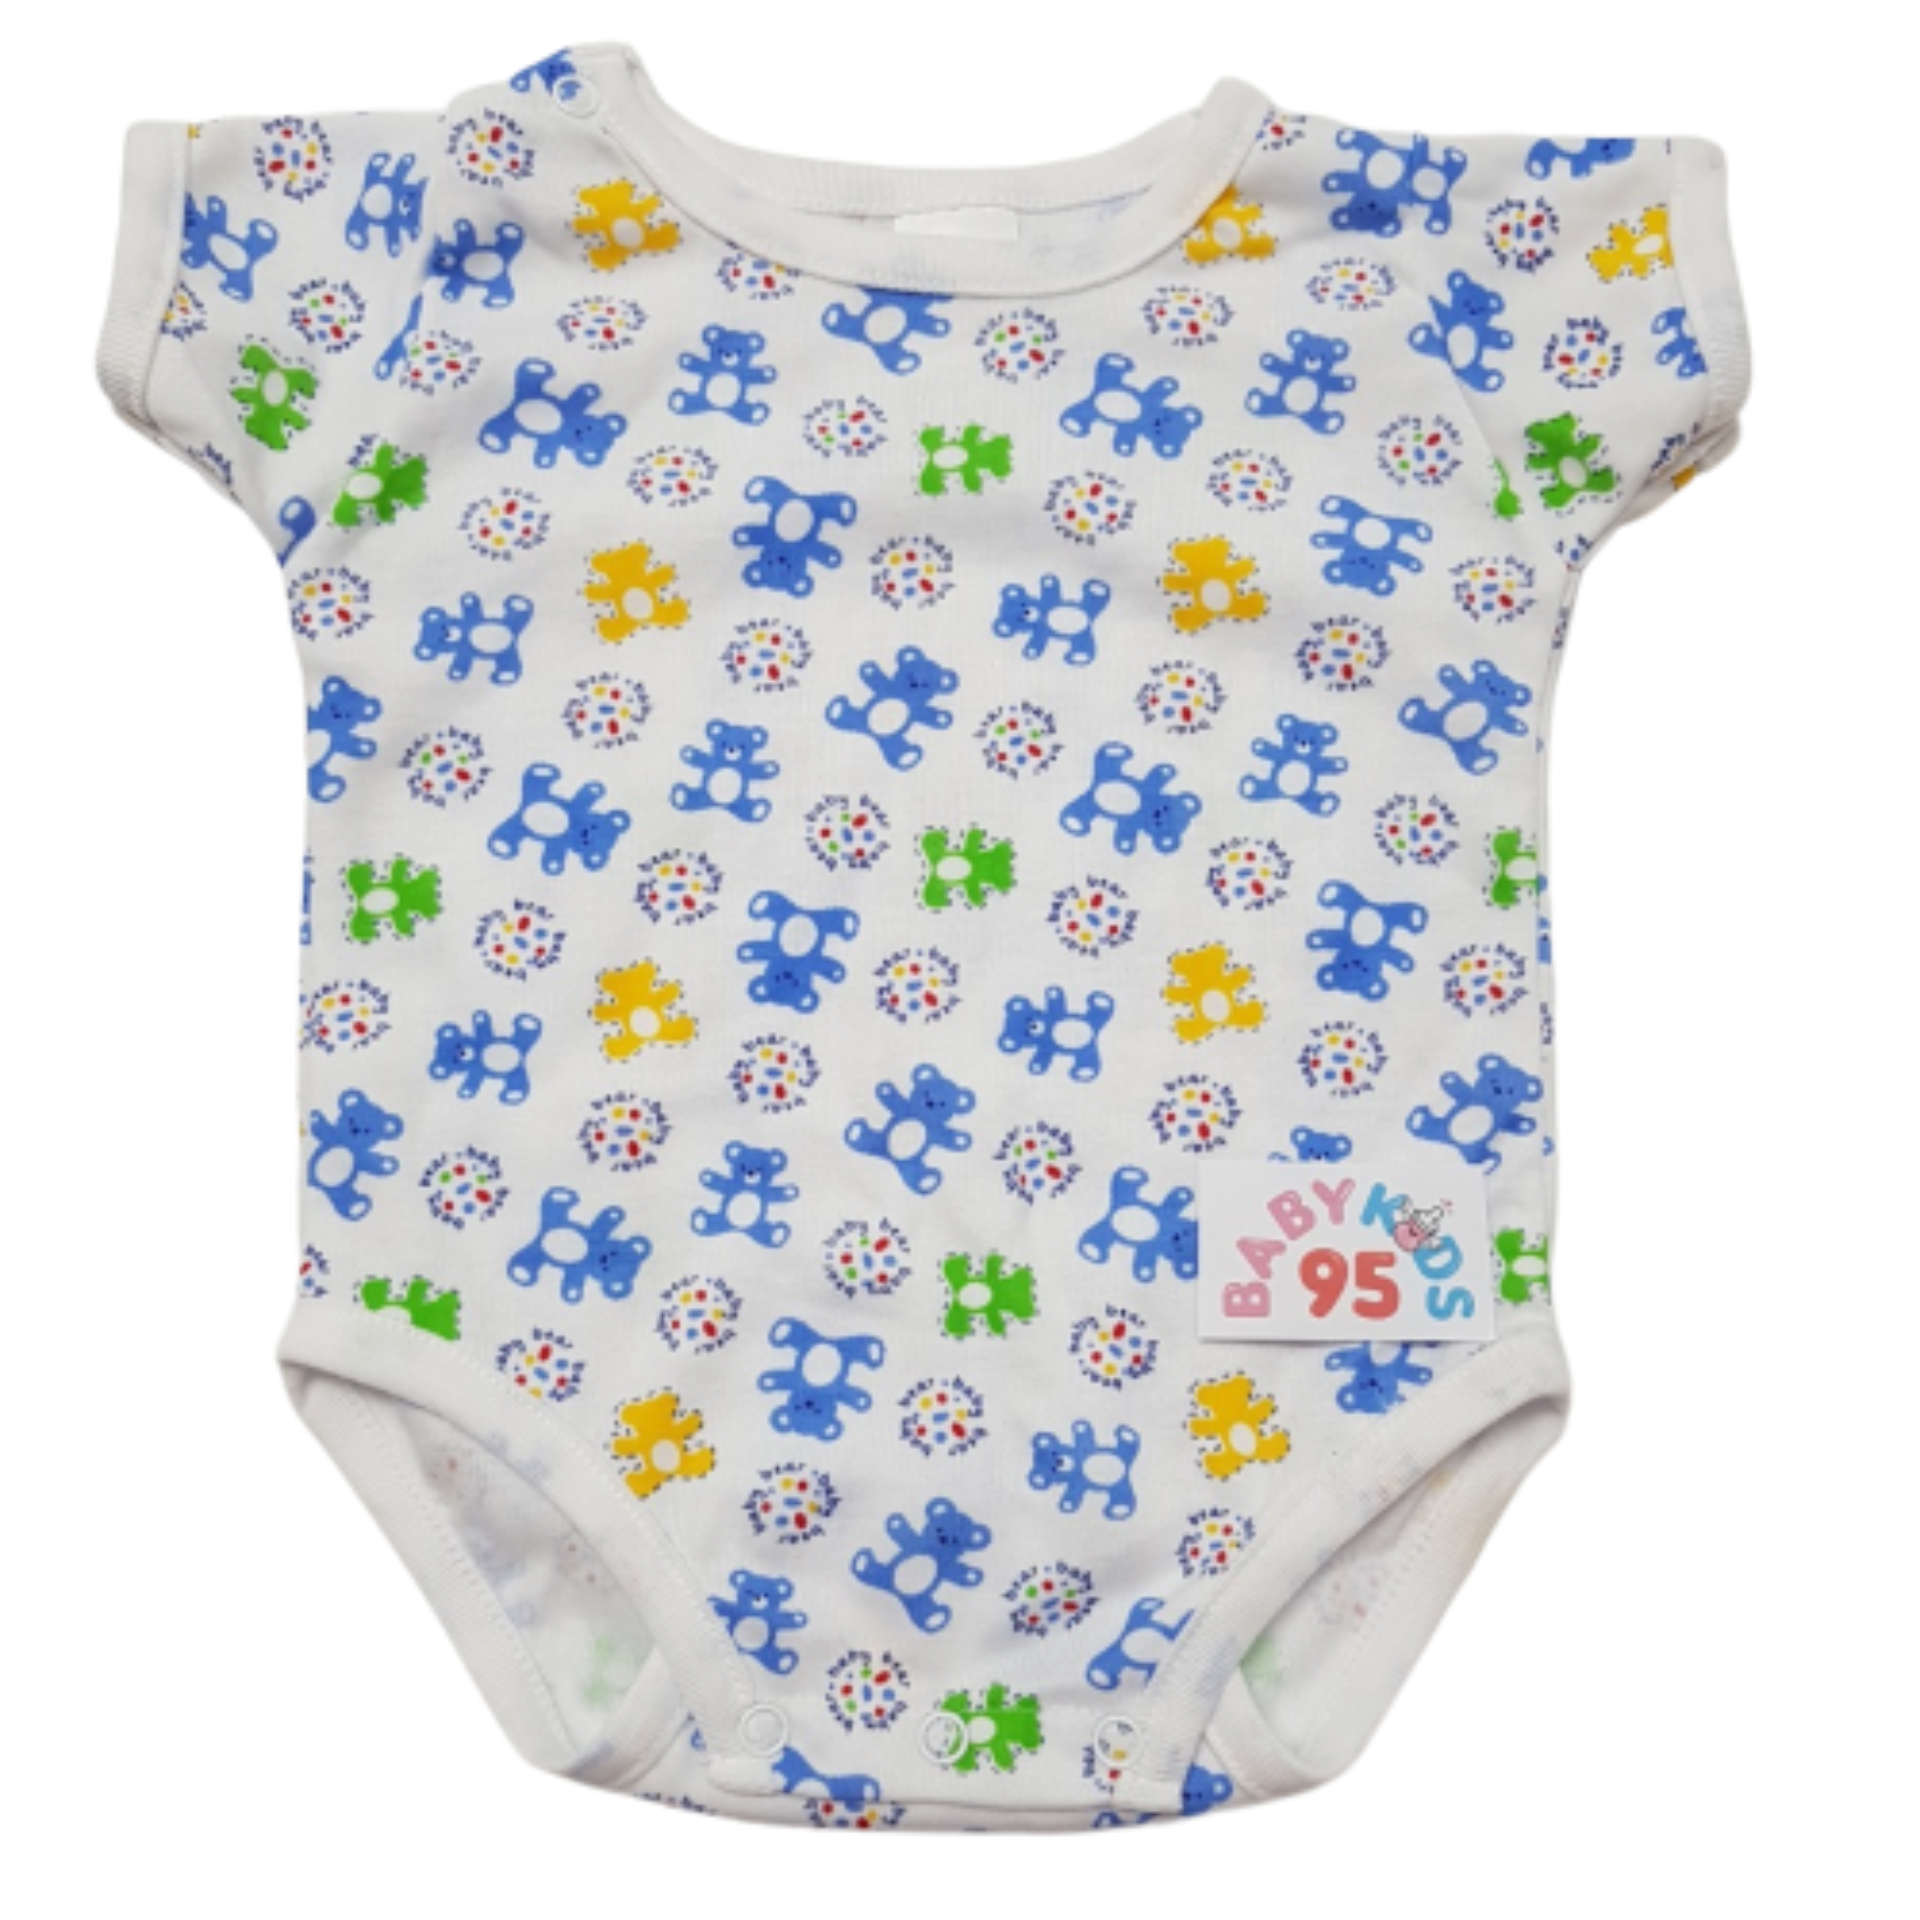 BABYKIDS95 (0-3 เดือน) บอดี้สูท เด็ก ชุดเด็ก เสื้อผ้าเด็ก Body suite Romper for Baby or Infant 0-3 months old ( 3M THR )  สีวัสดุ THR24